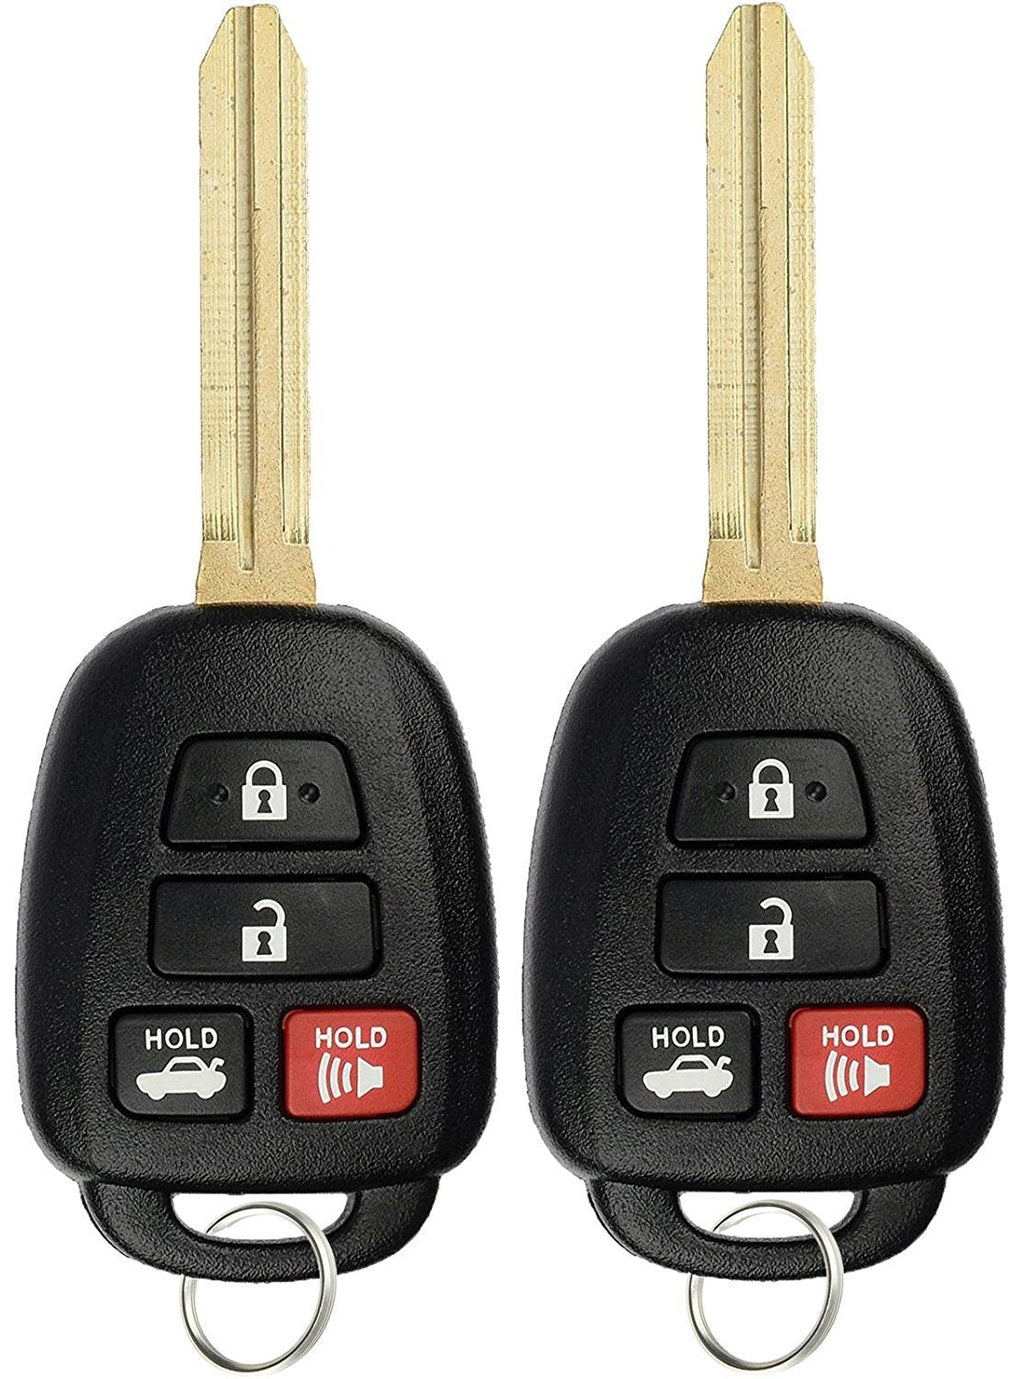  [AUSTRALIA] - KeylessOption Keyless Entry Remote Car Fob Ignition Key for Toyota Camry with G Chip HYQ12BDM (Pack of 2)